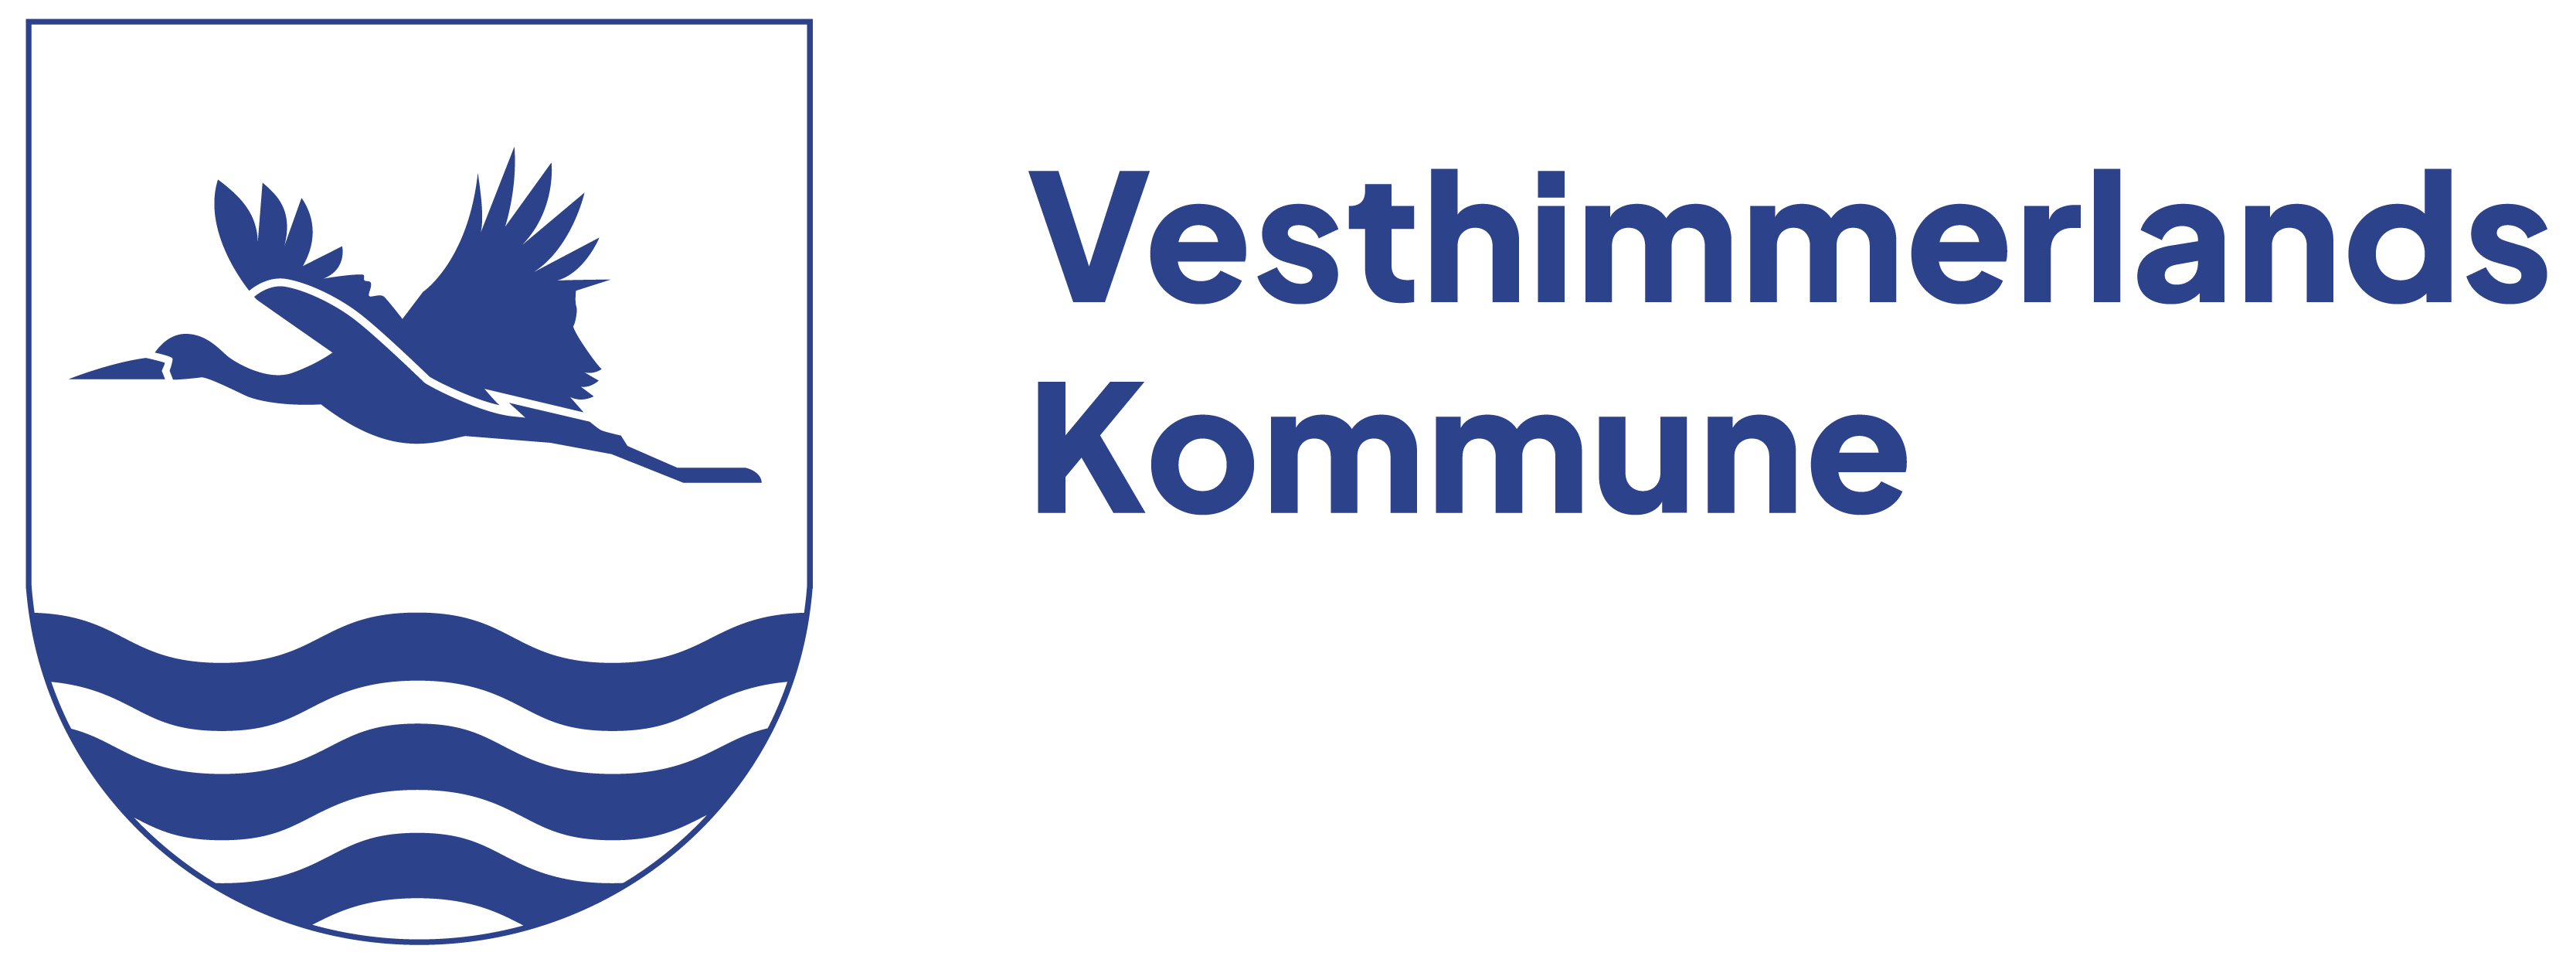 Vesthimmerlands Kommune